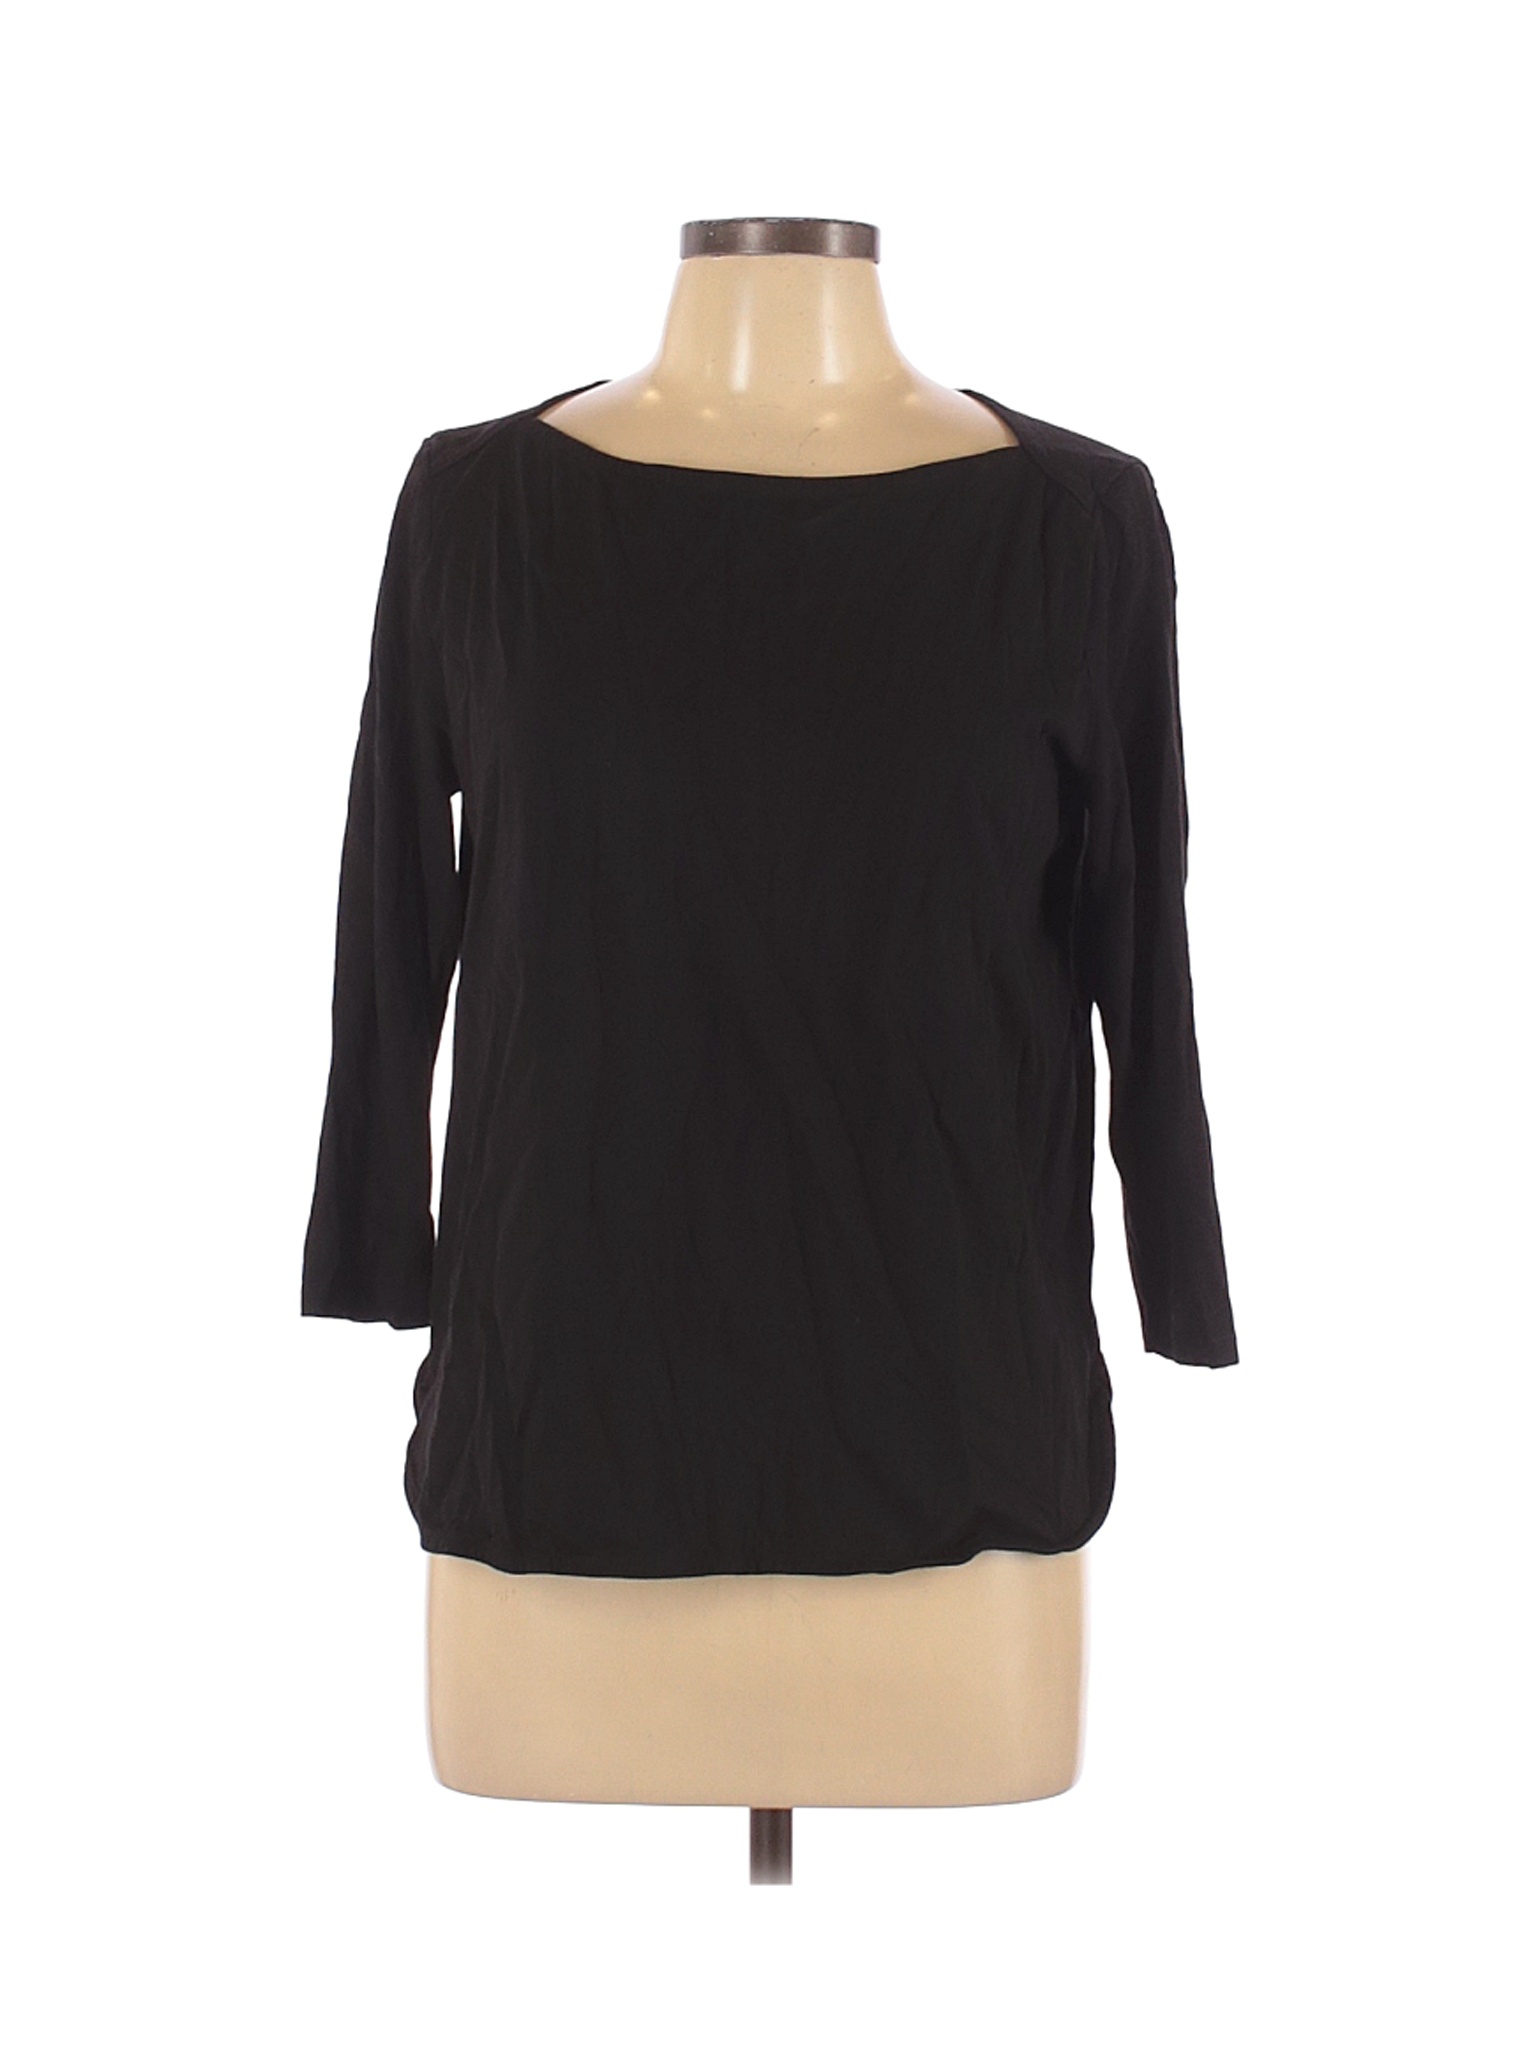 Ann Taylor Women Black Long Sleeve Top L | eBay